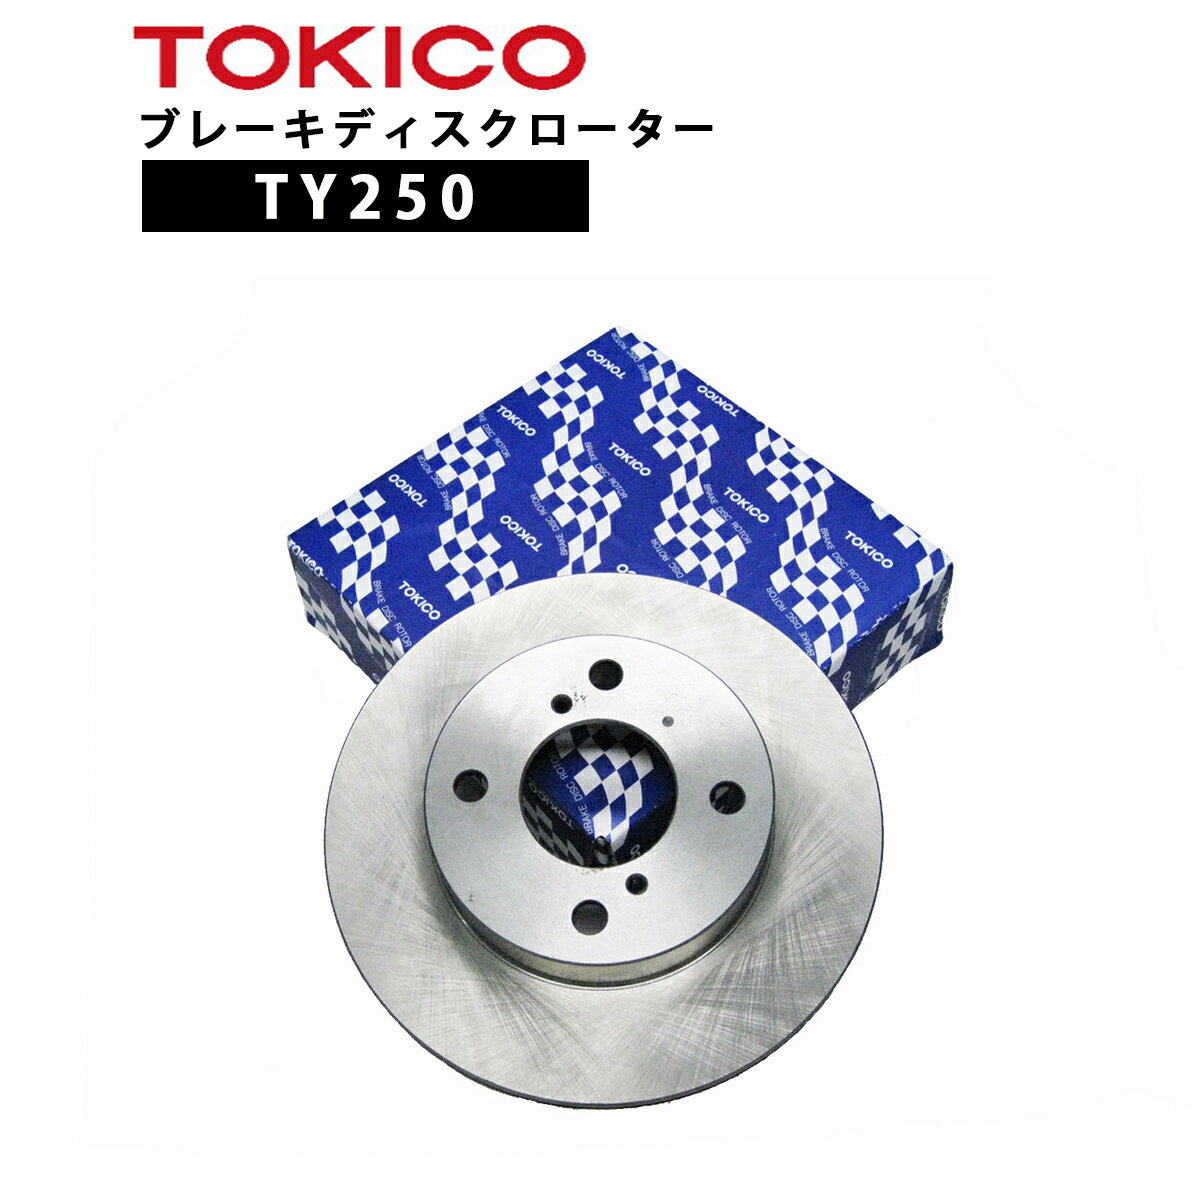 TY250 TOKICO ブレーキディスクローター リヤ 1枚 片側 トキコ 適合 純正 トヨタ 42431-12260 オーリス R NZE151H 他社 T6-124B A6R324